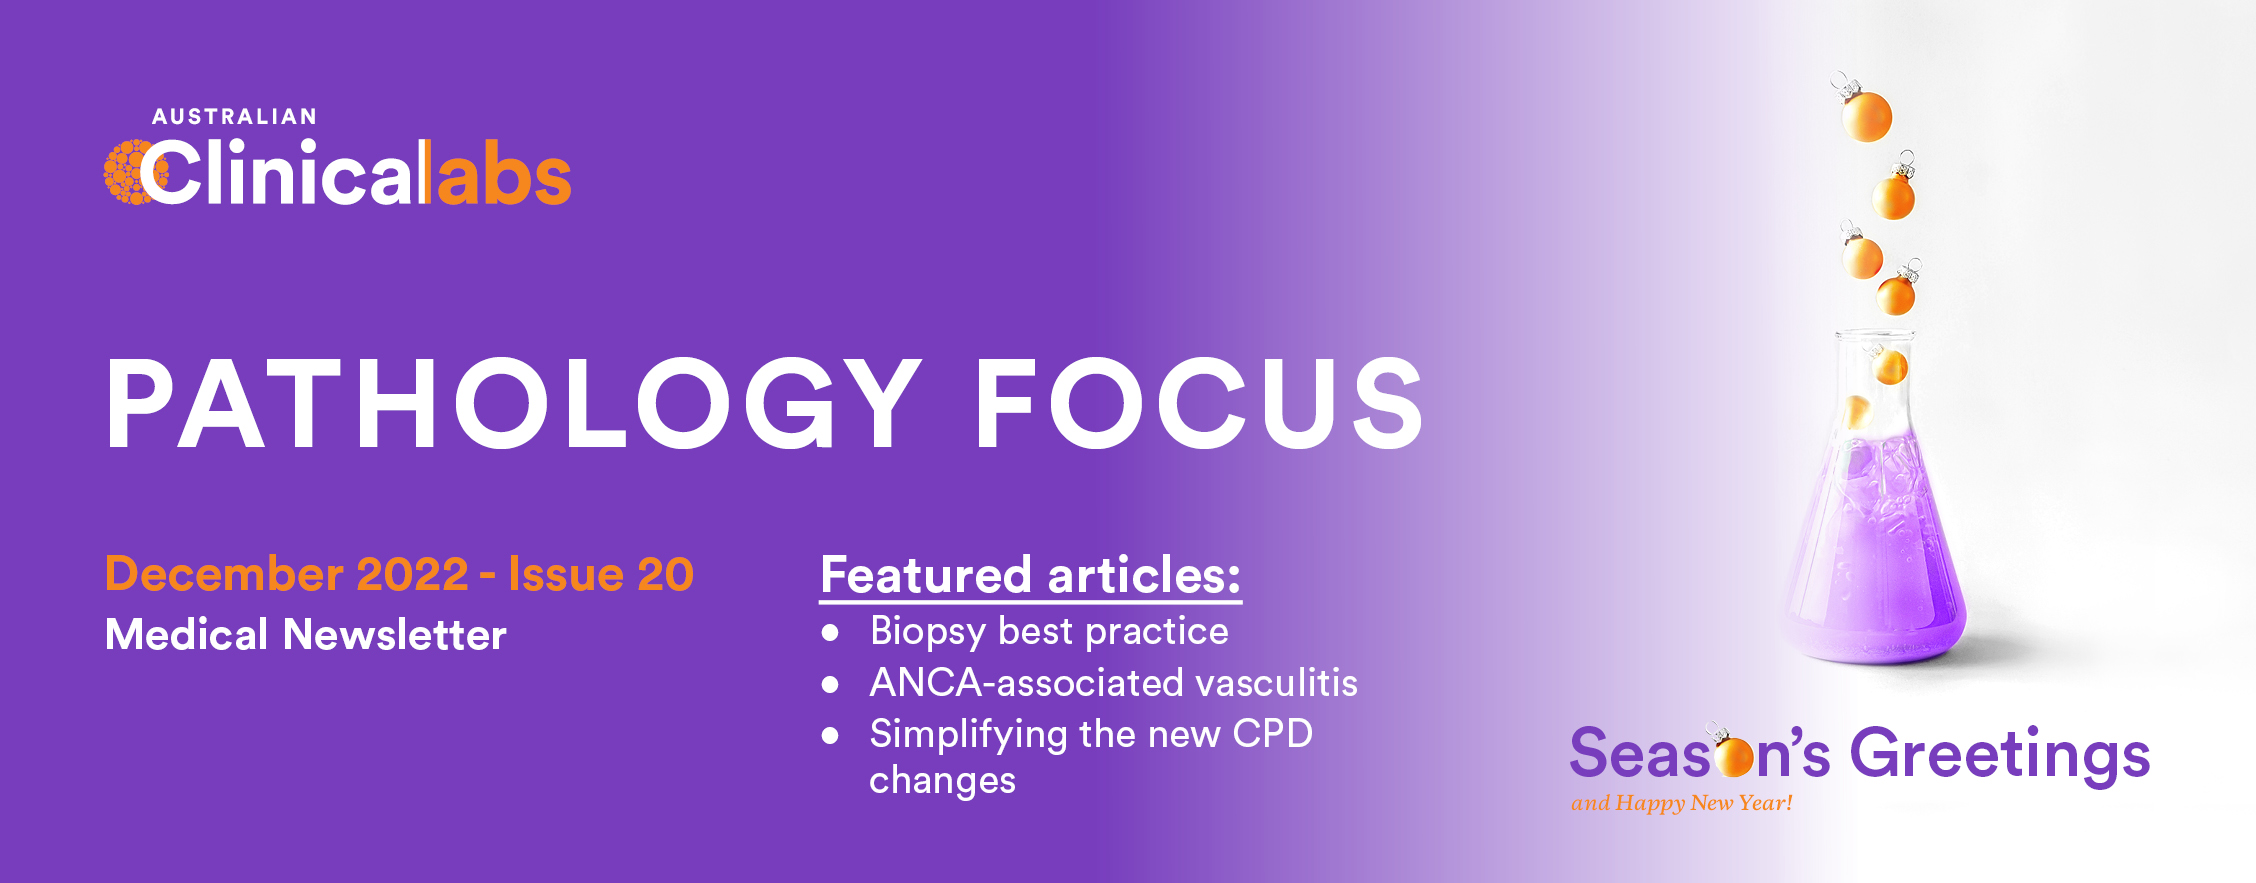 pathology-focus-dec-2022-vic-qld-cover-1083x424pxjpg